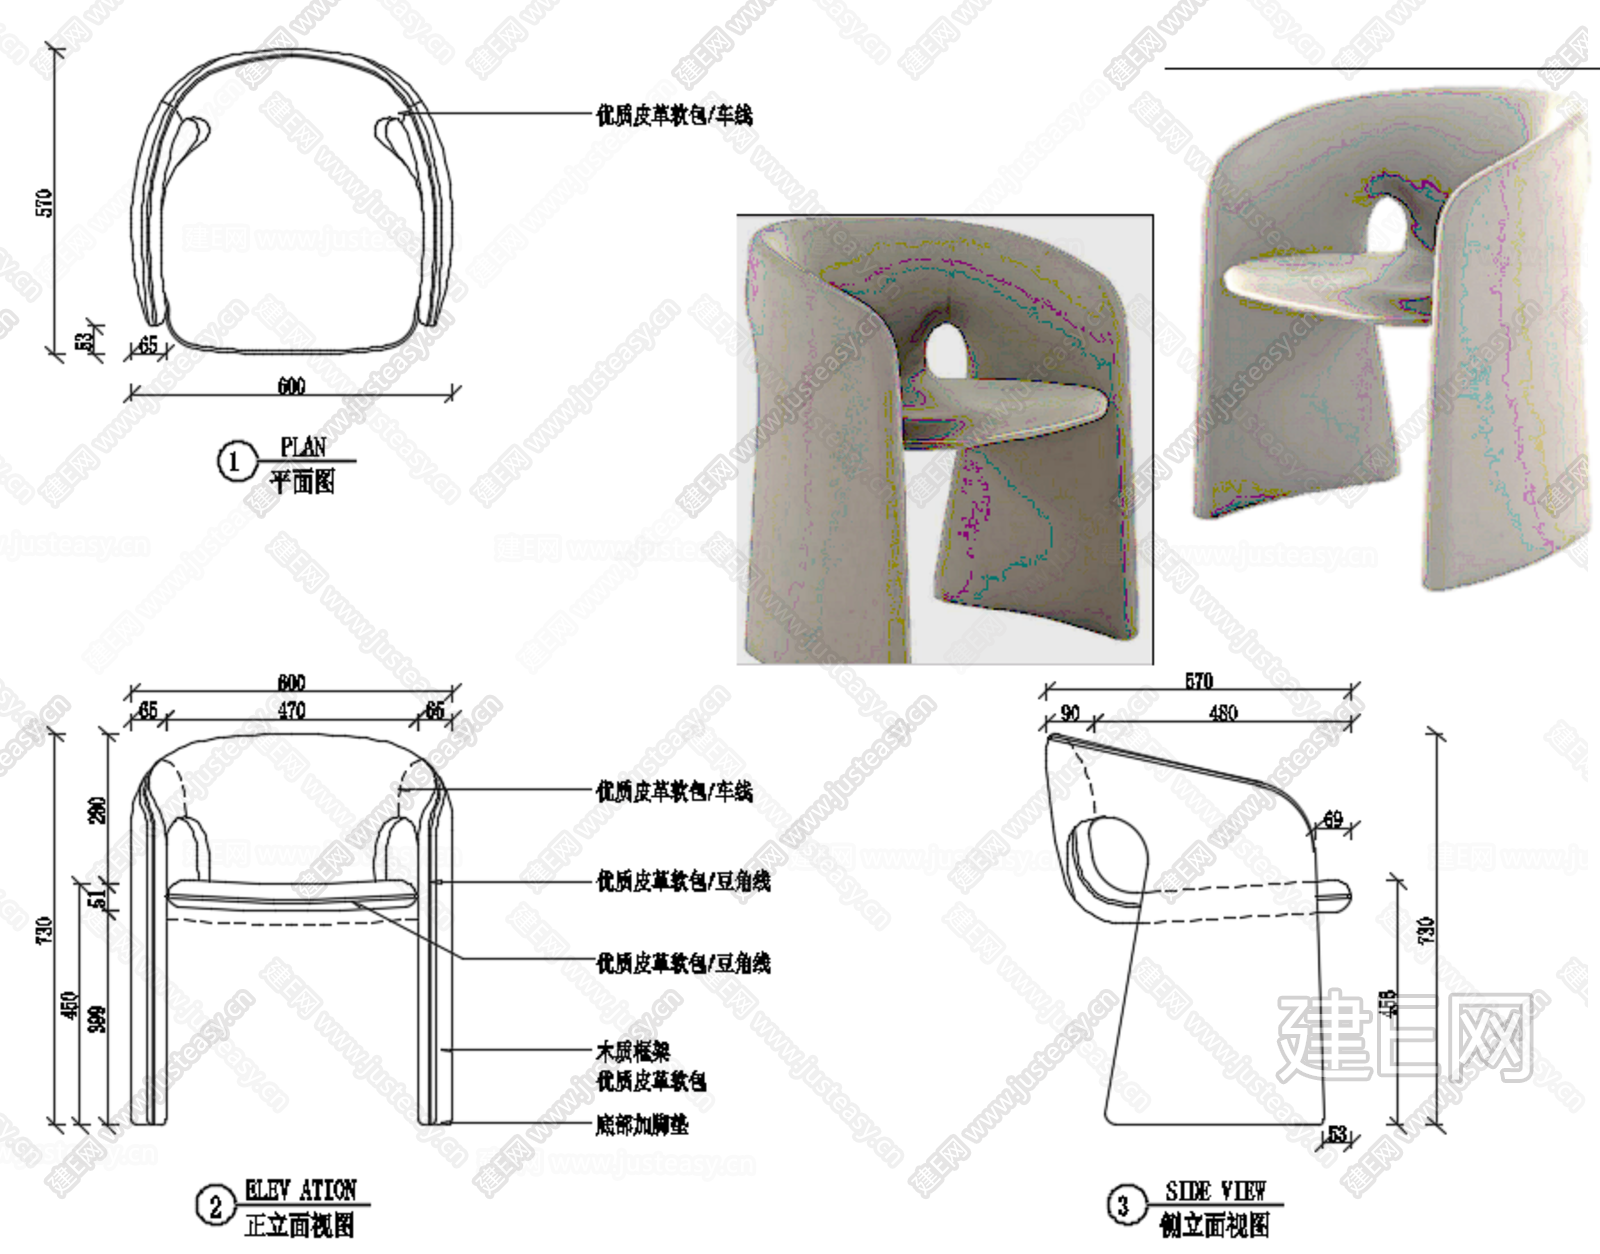 CAD家具设计单椅三视图cad施工图